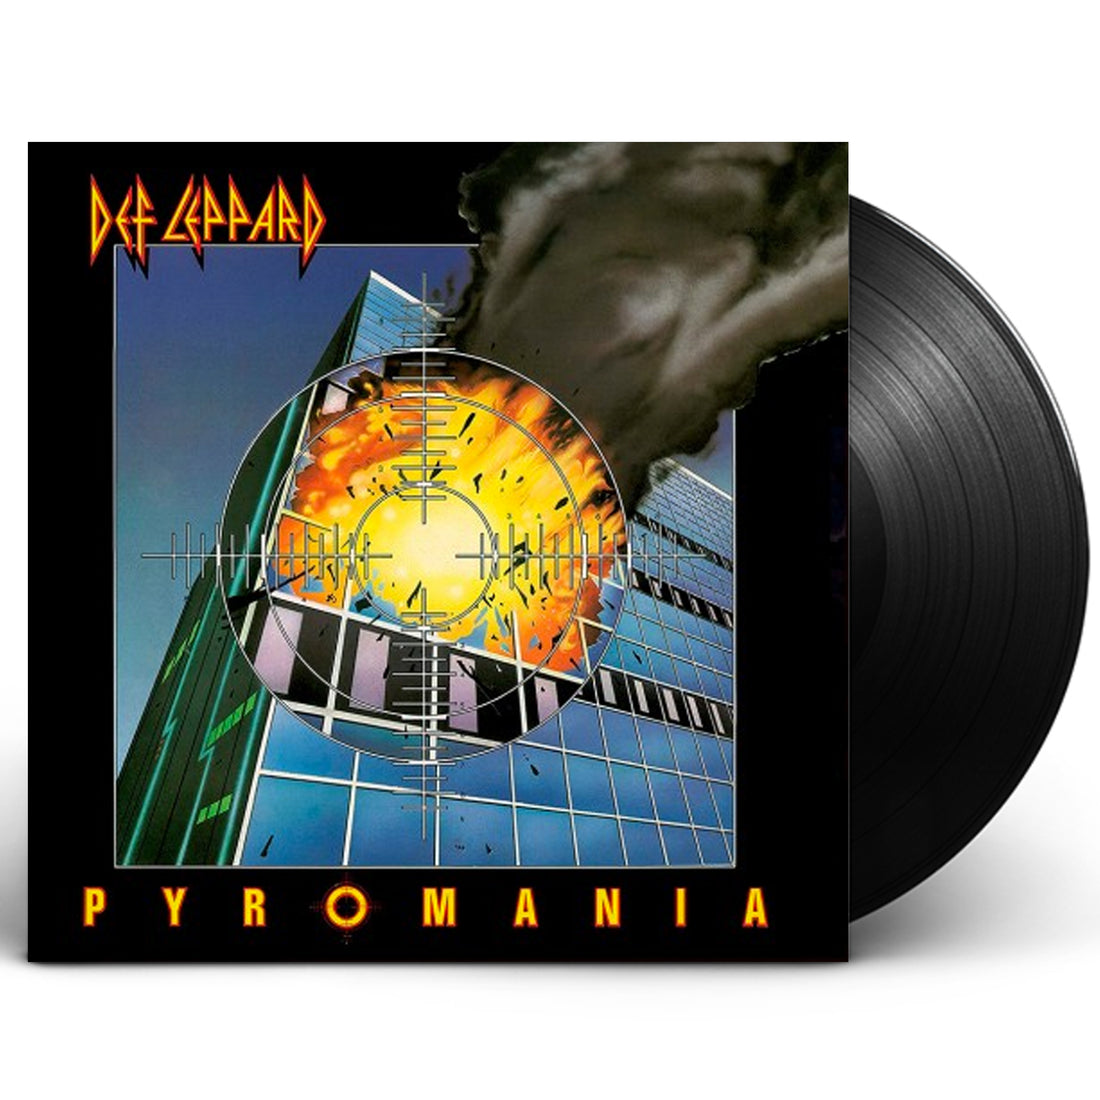 Def Leppard "Pyromania" LP Vinyl